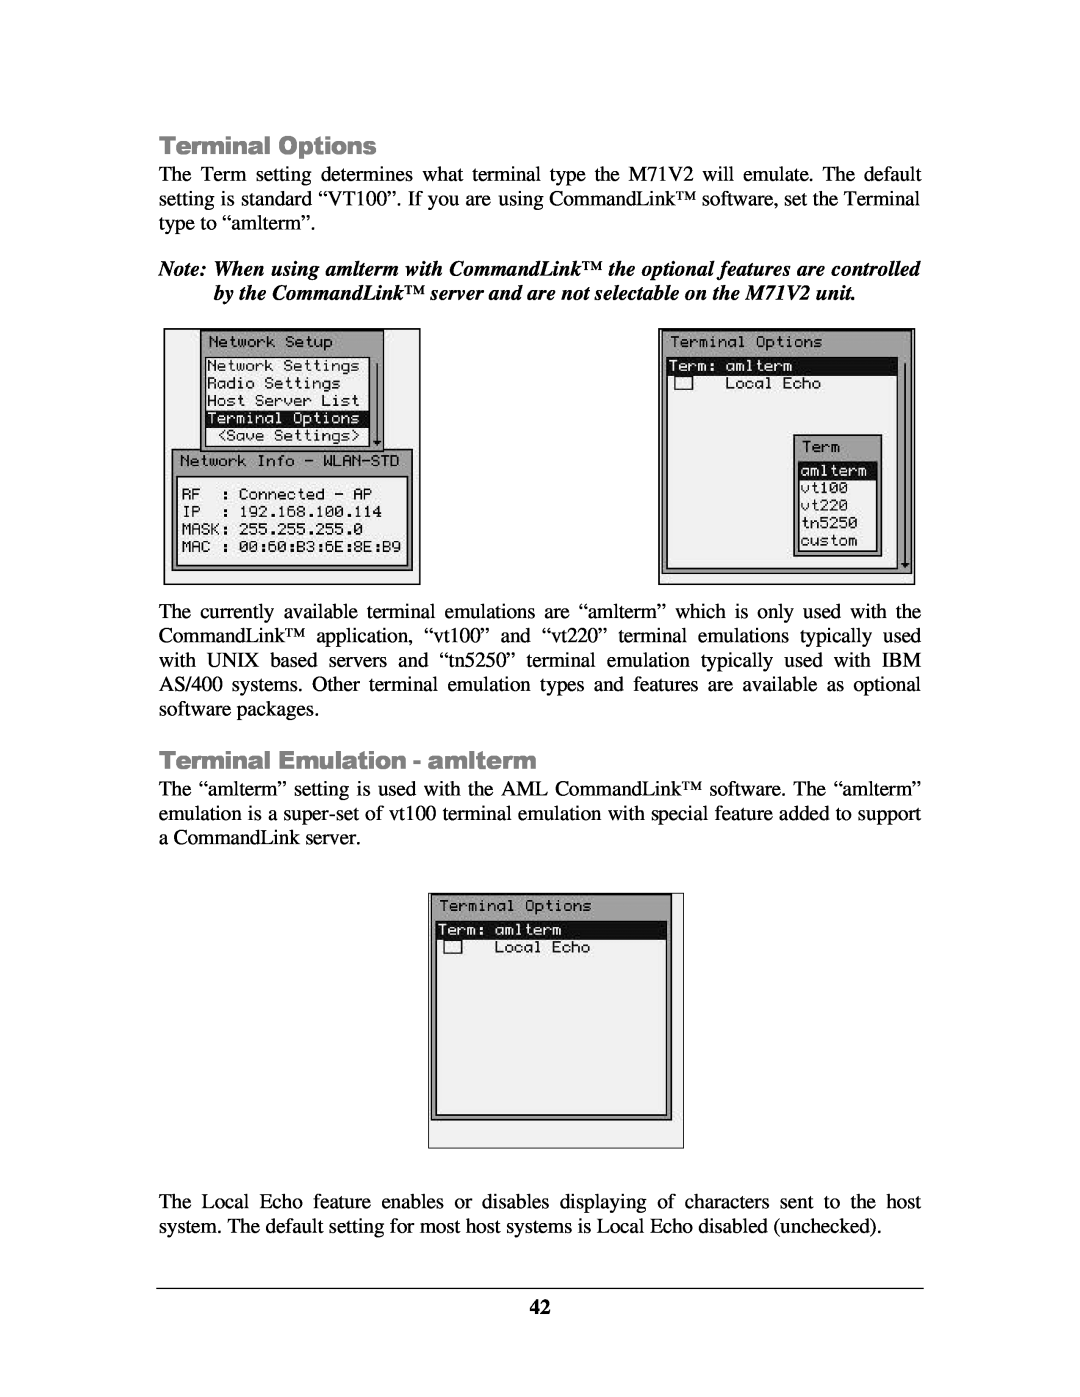 IBM M71V2 manual Terminal Options, Terminal Emulation - amlterm 